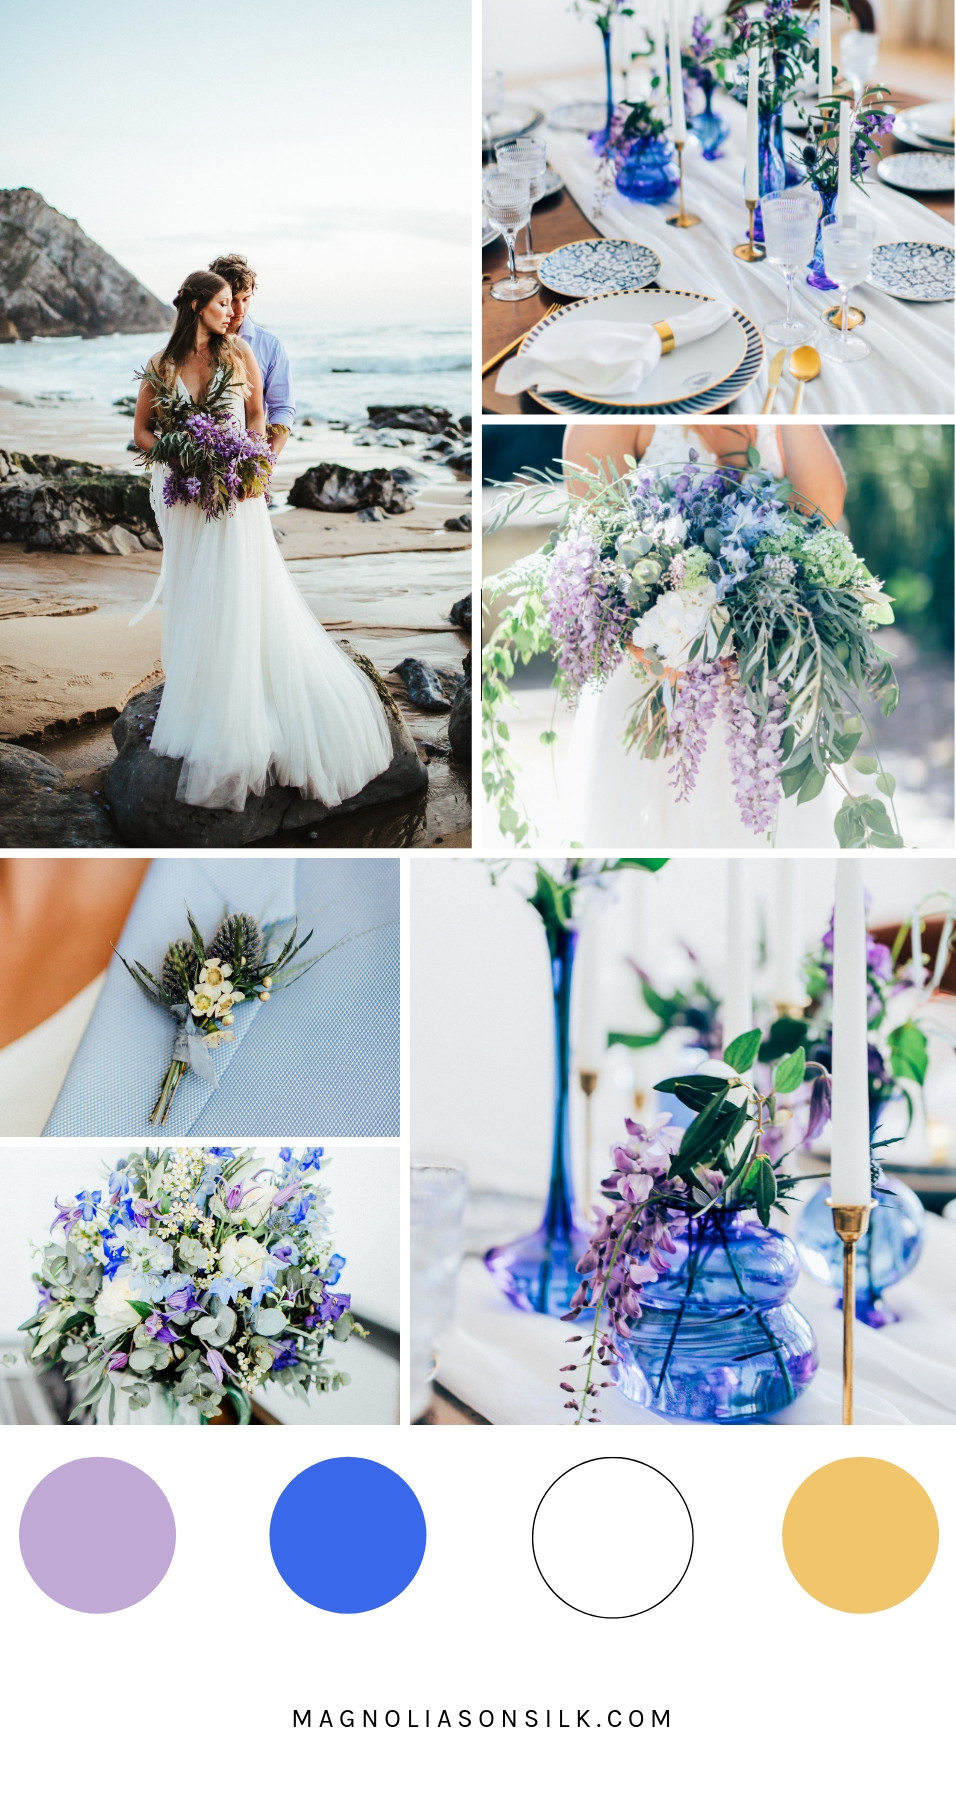 Wedding Color Schemes For Spring
 Top 5 Spring Wedding Color Palettes